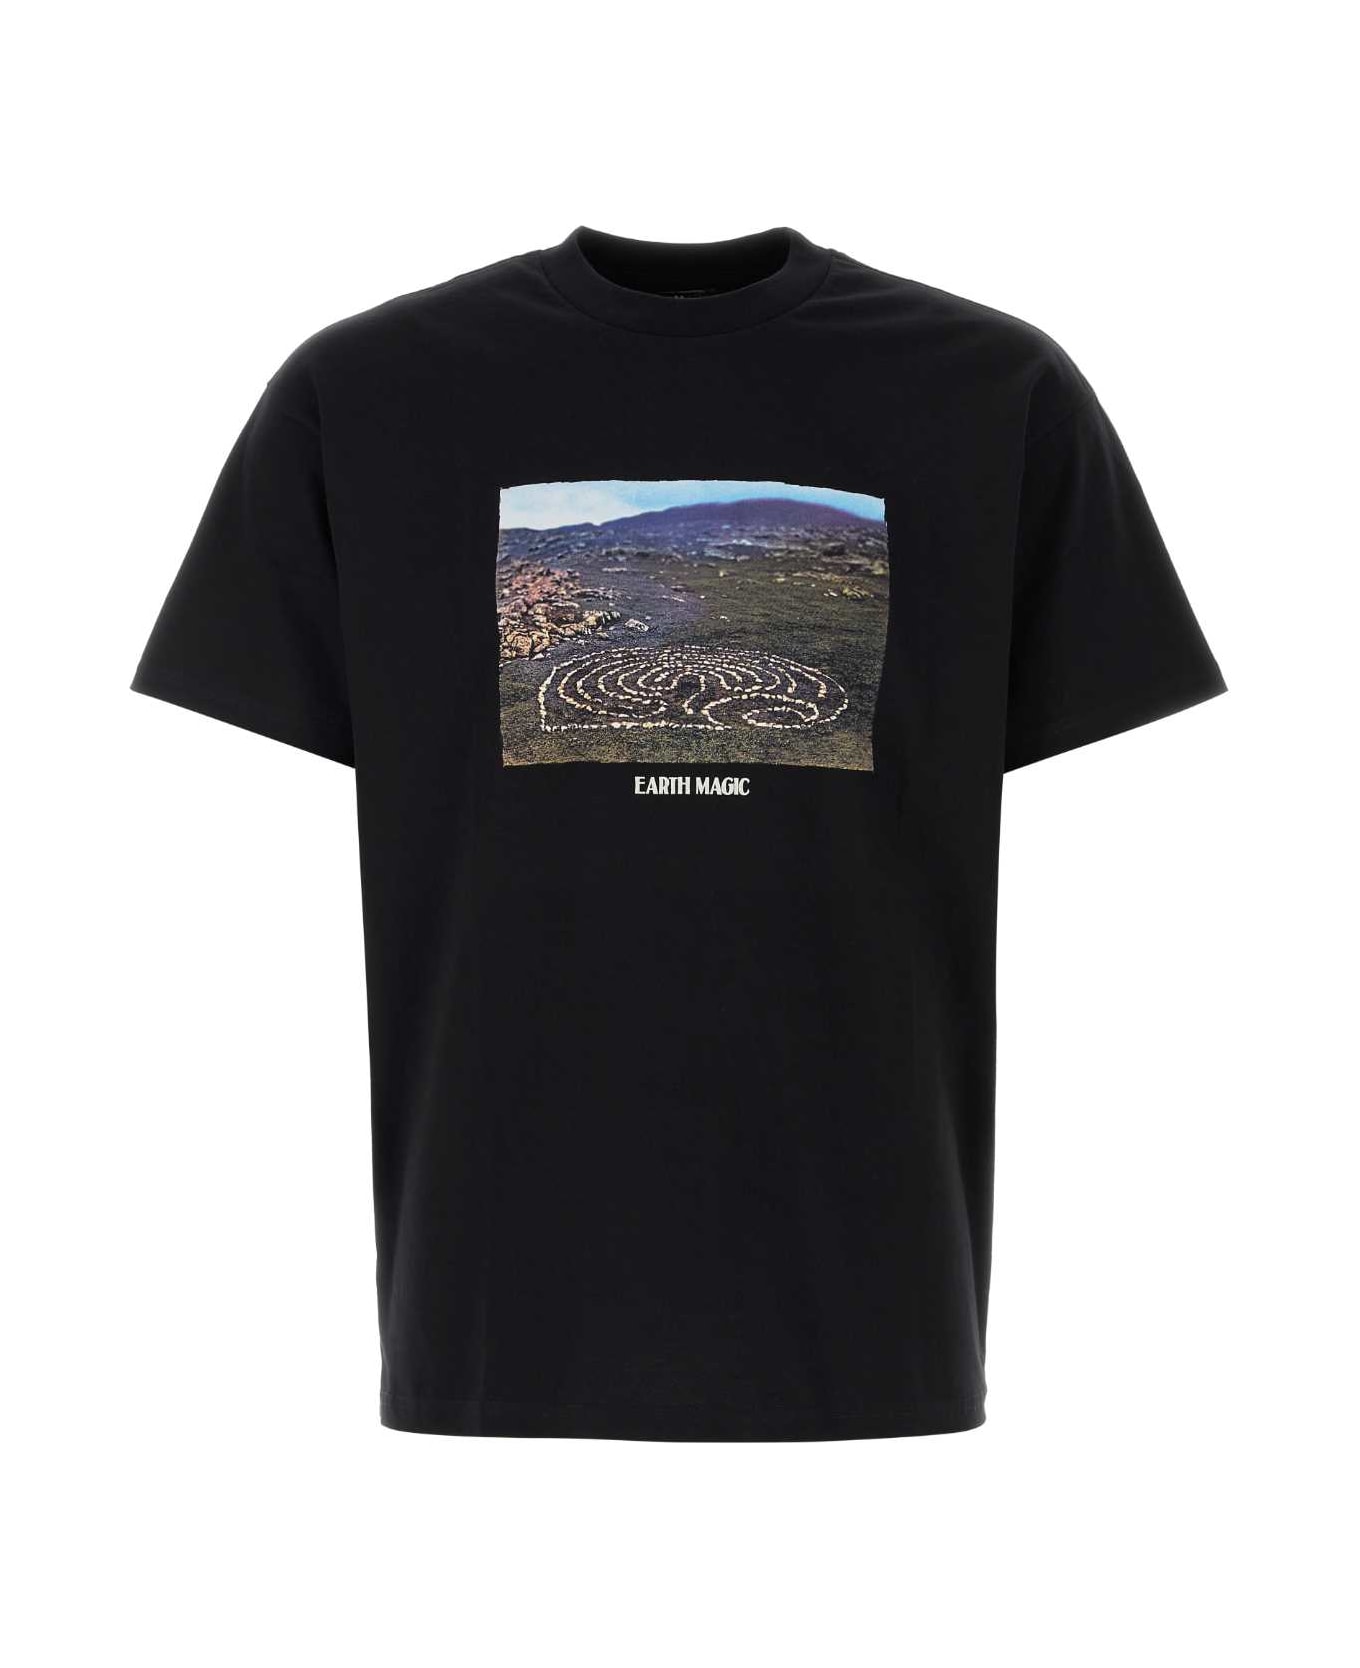 Carhartt Black Cotton S/s Earth Magic T-shirt - BLKRIGID